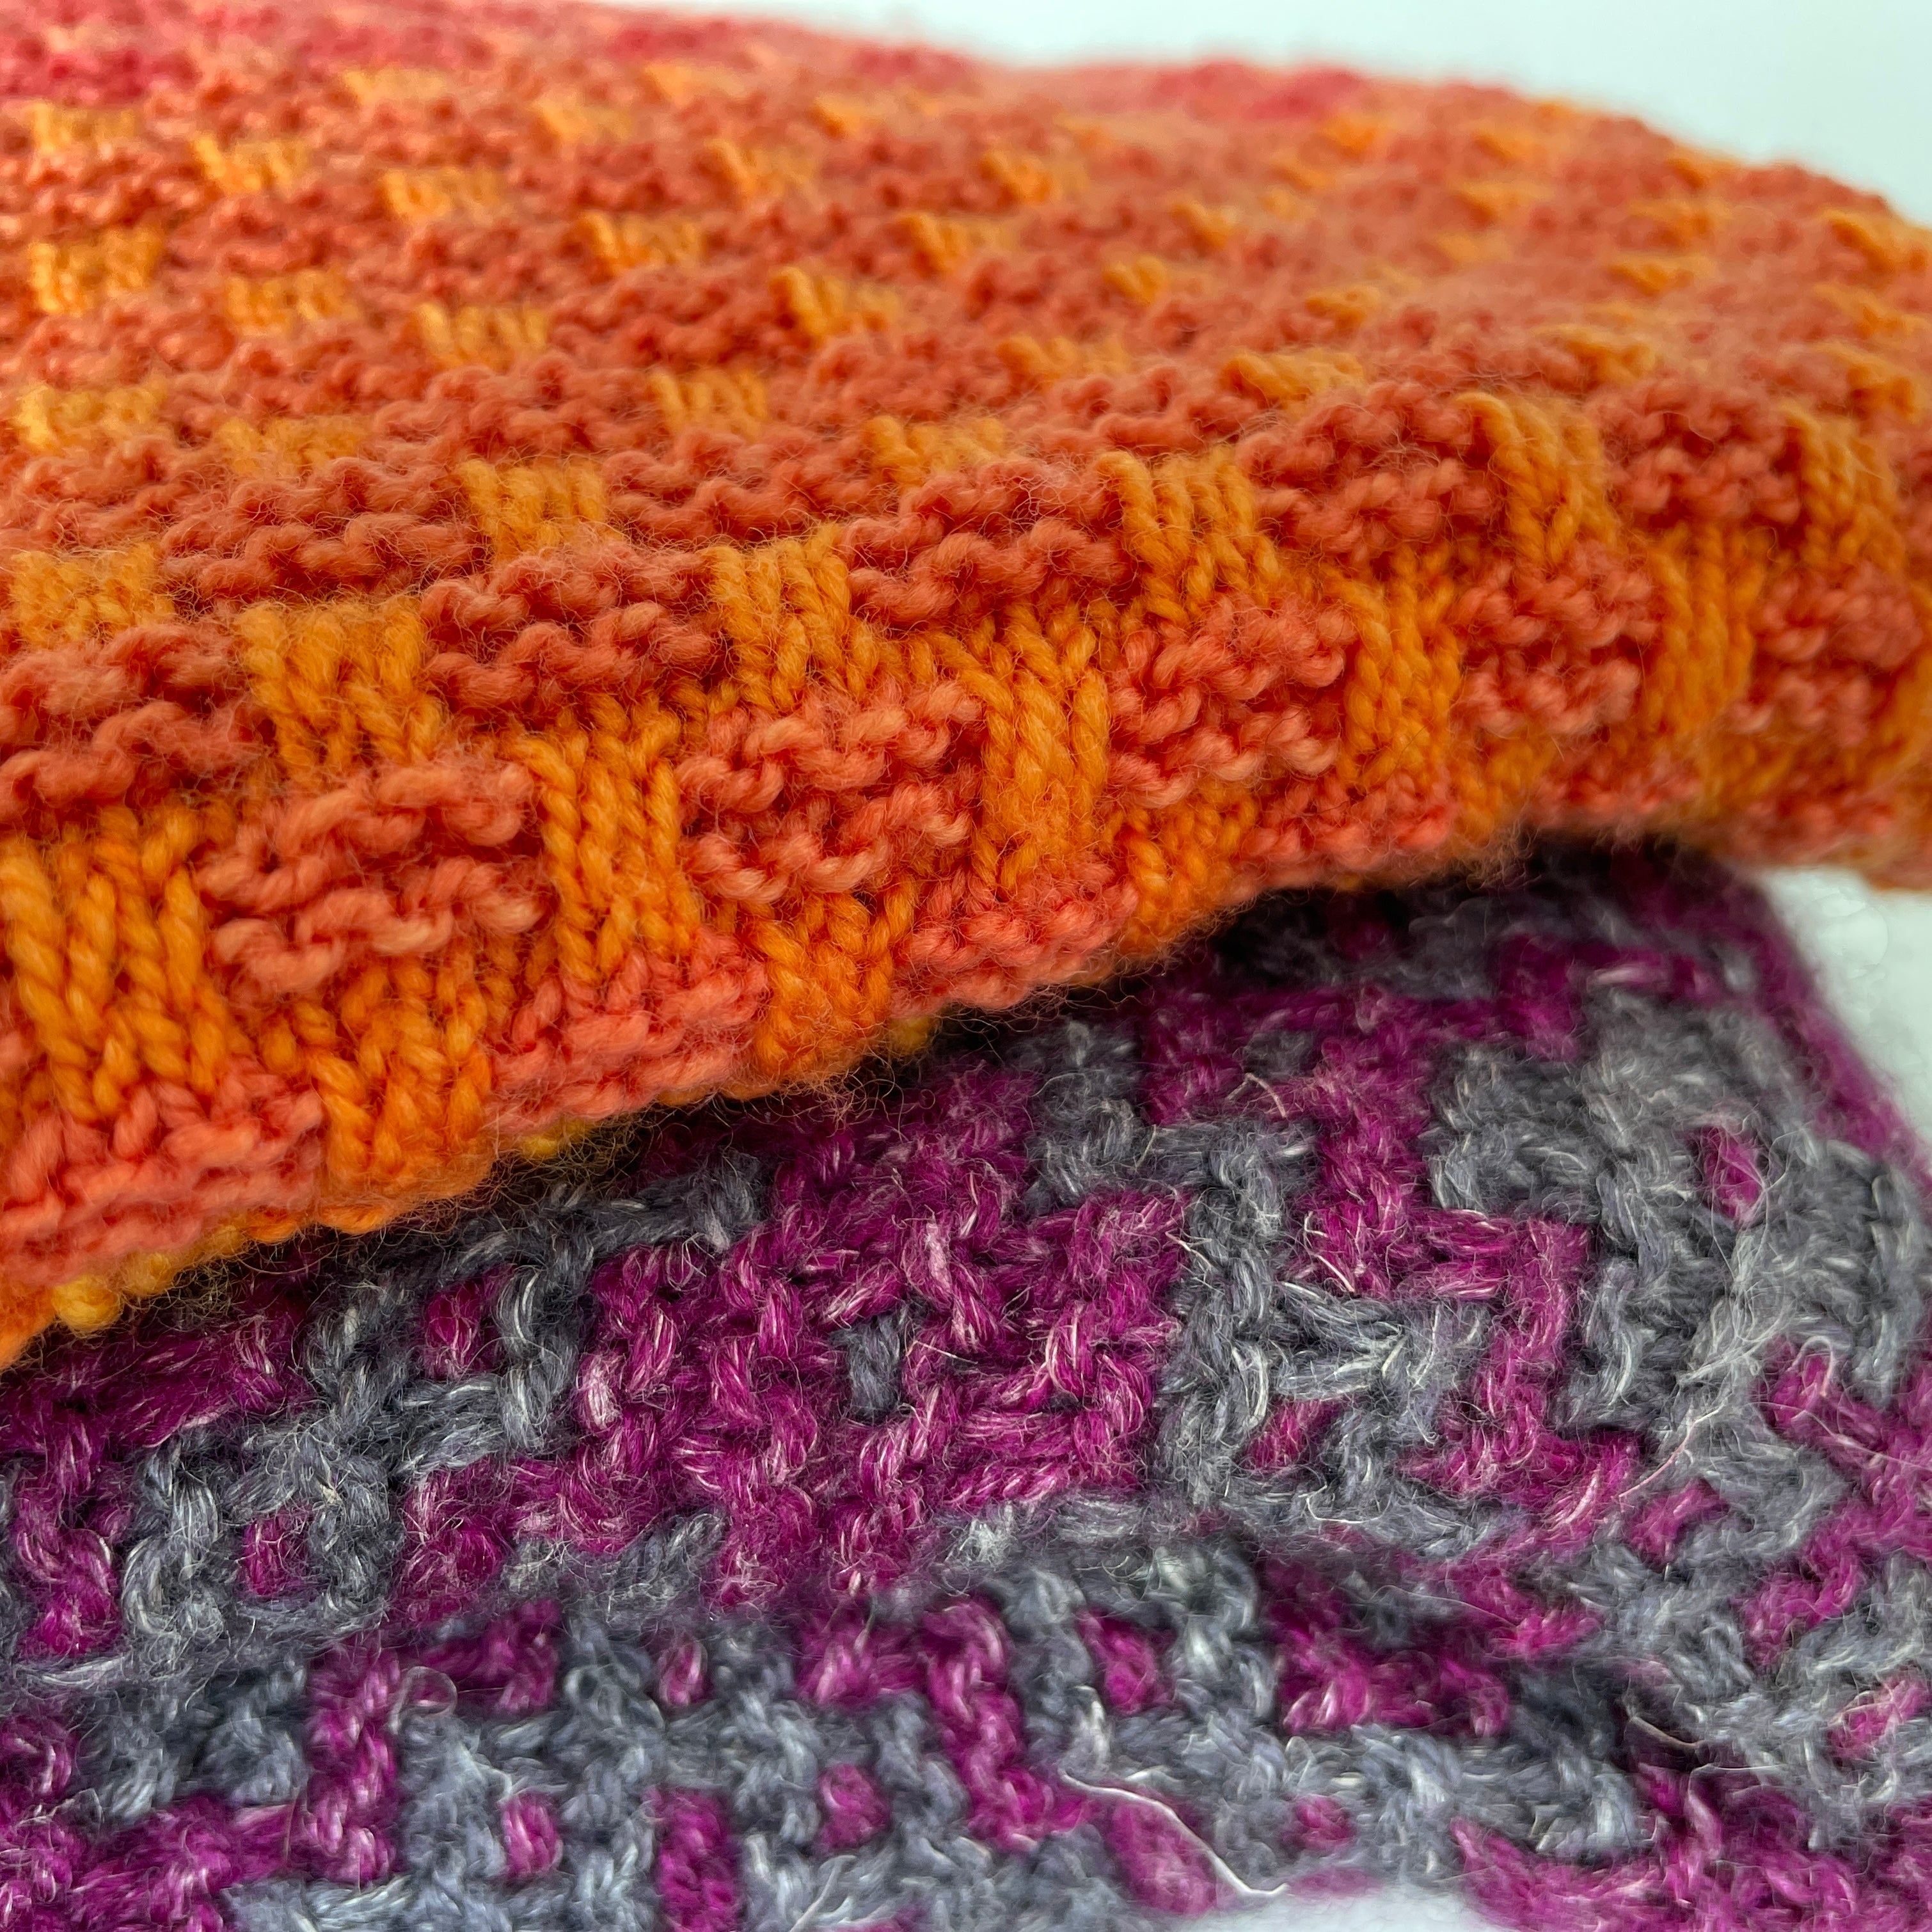 Learn to Knit: How to Knit Slip Stitch Colourwork | Stolen Stitches Tutorial